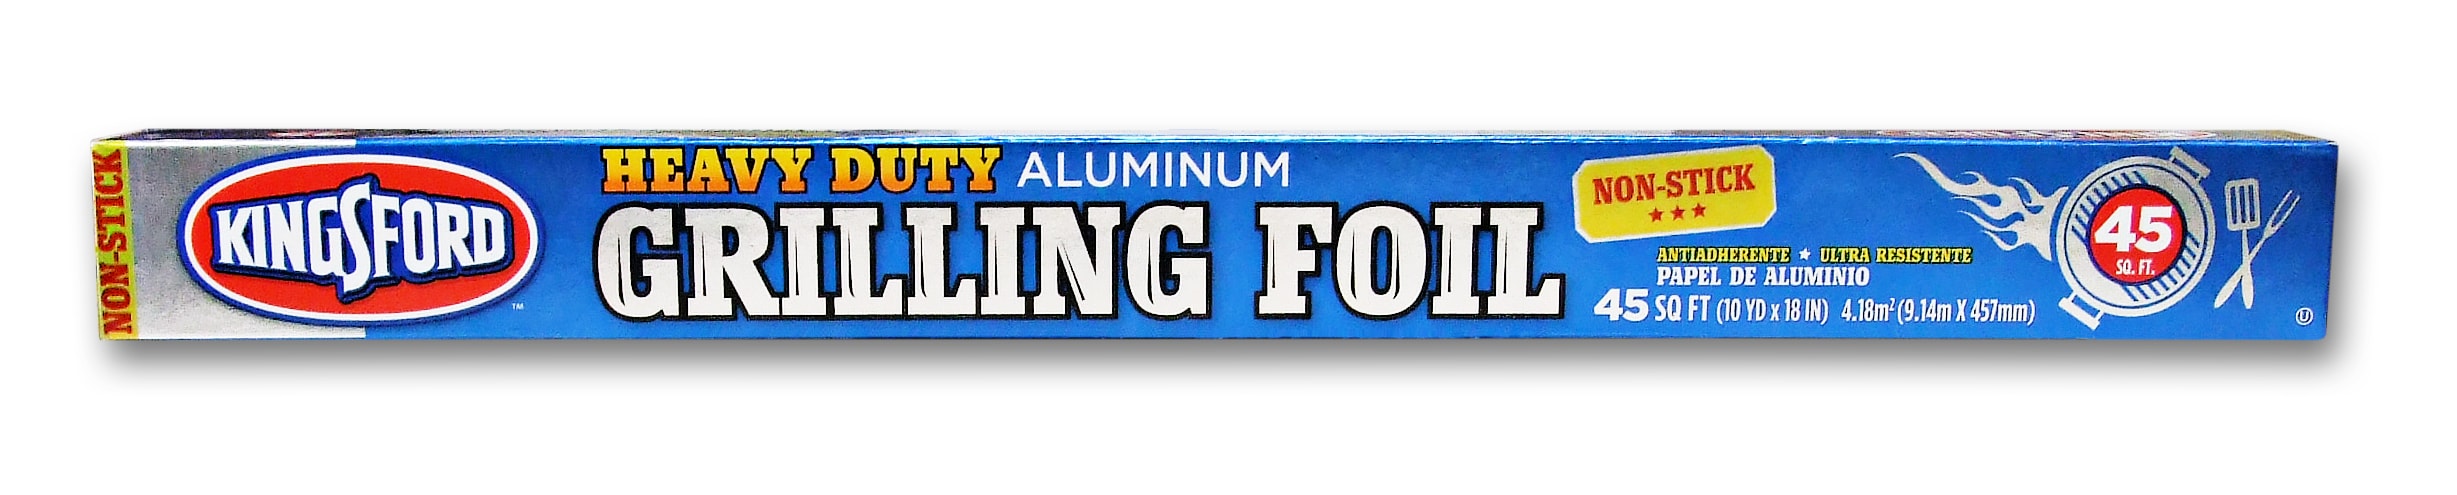 Kingsford 120 Sq. ft. Standard Heavy-Duty Aluminum Grilling Foil (2-Pack), Silver